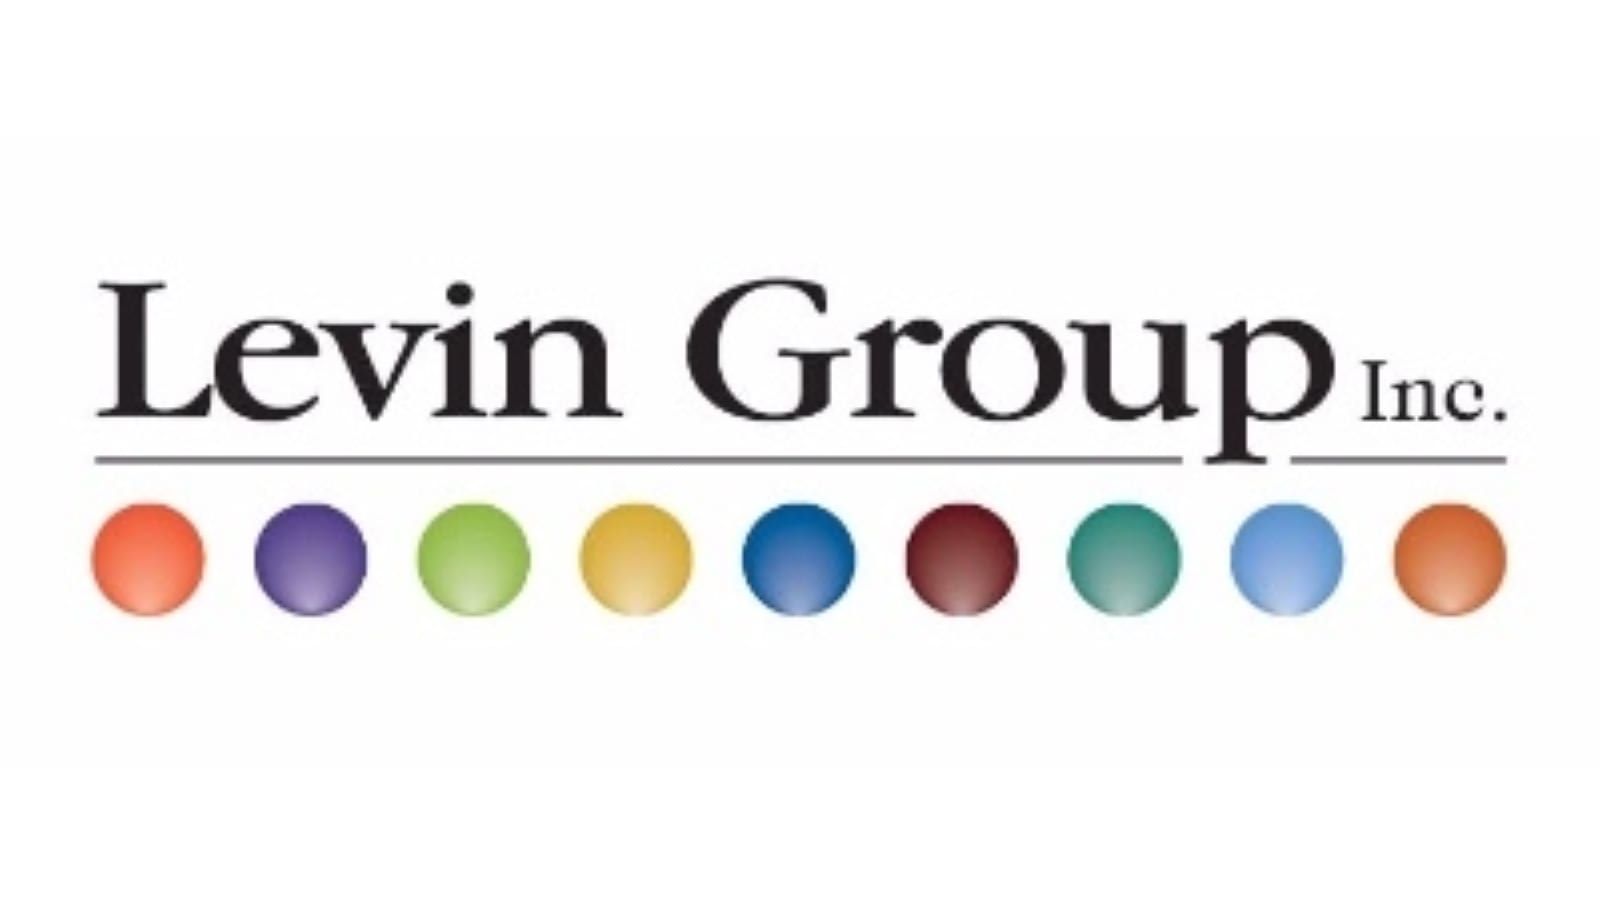 Levin group inc logo